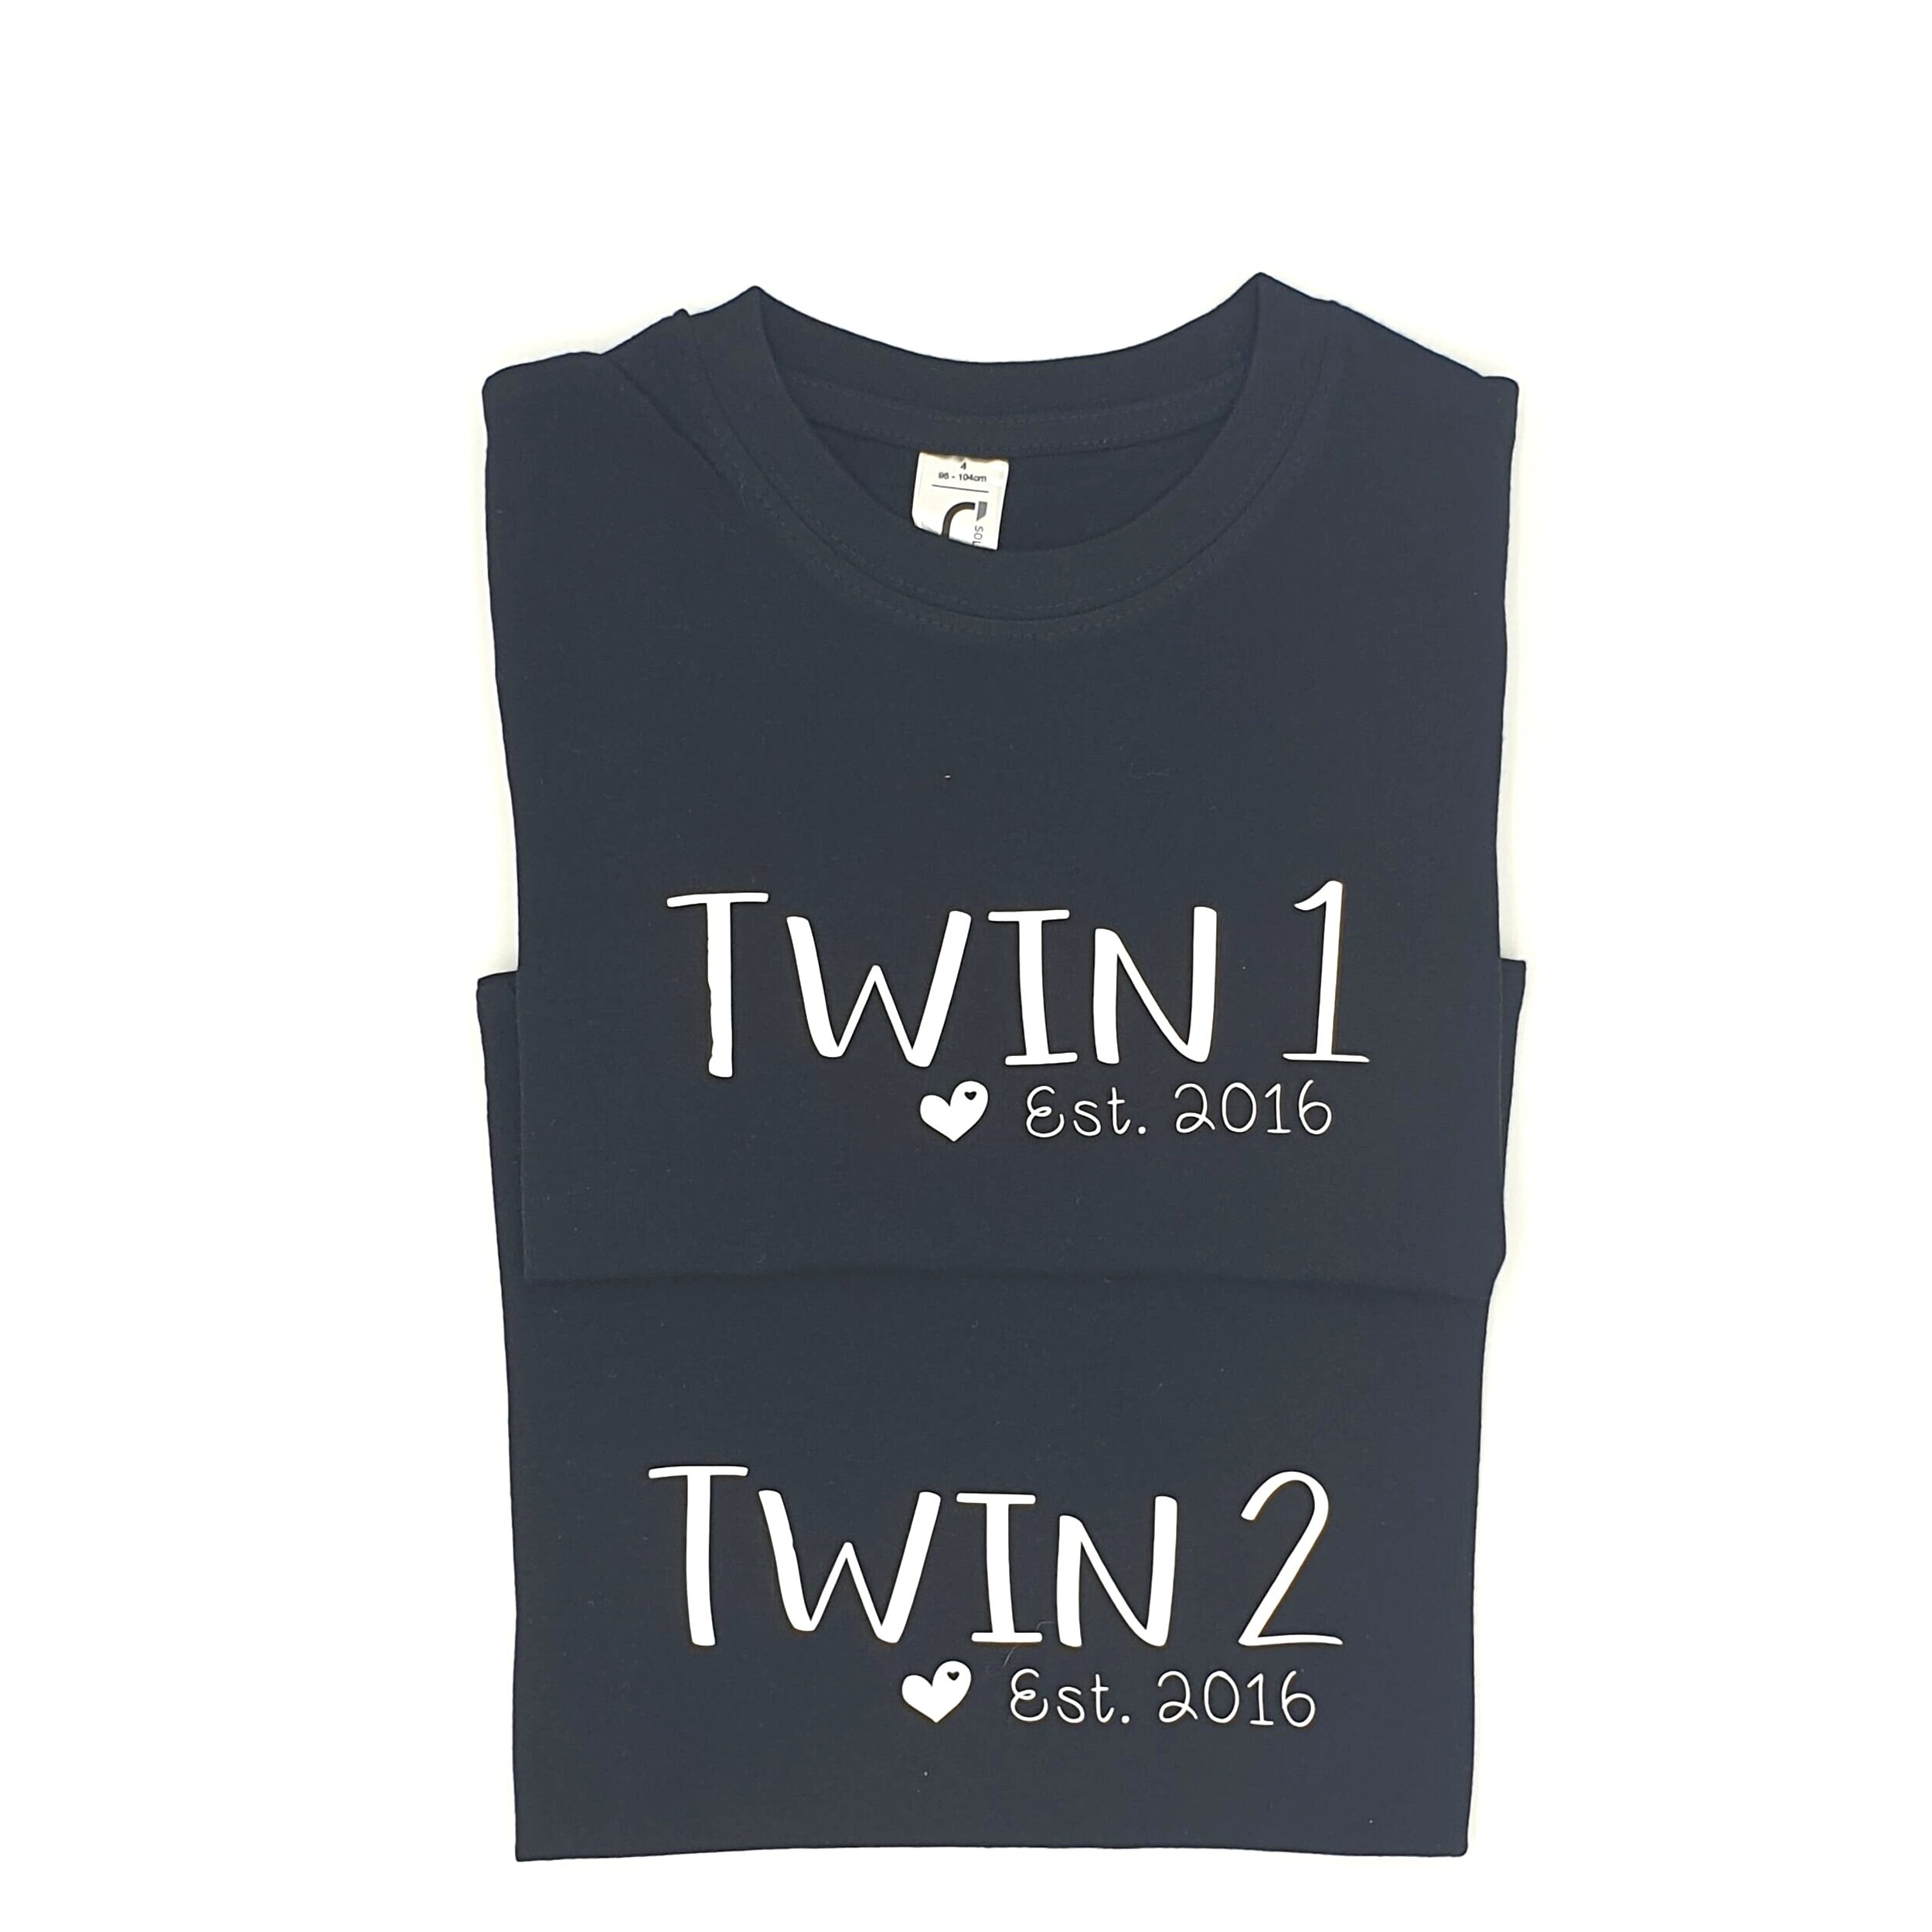 twin 1 twin 2 shirts